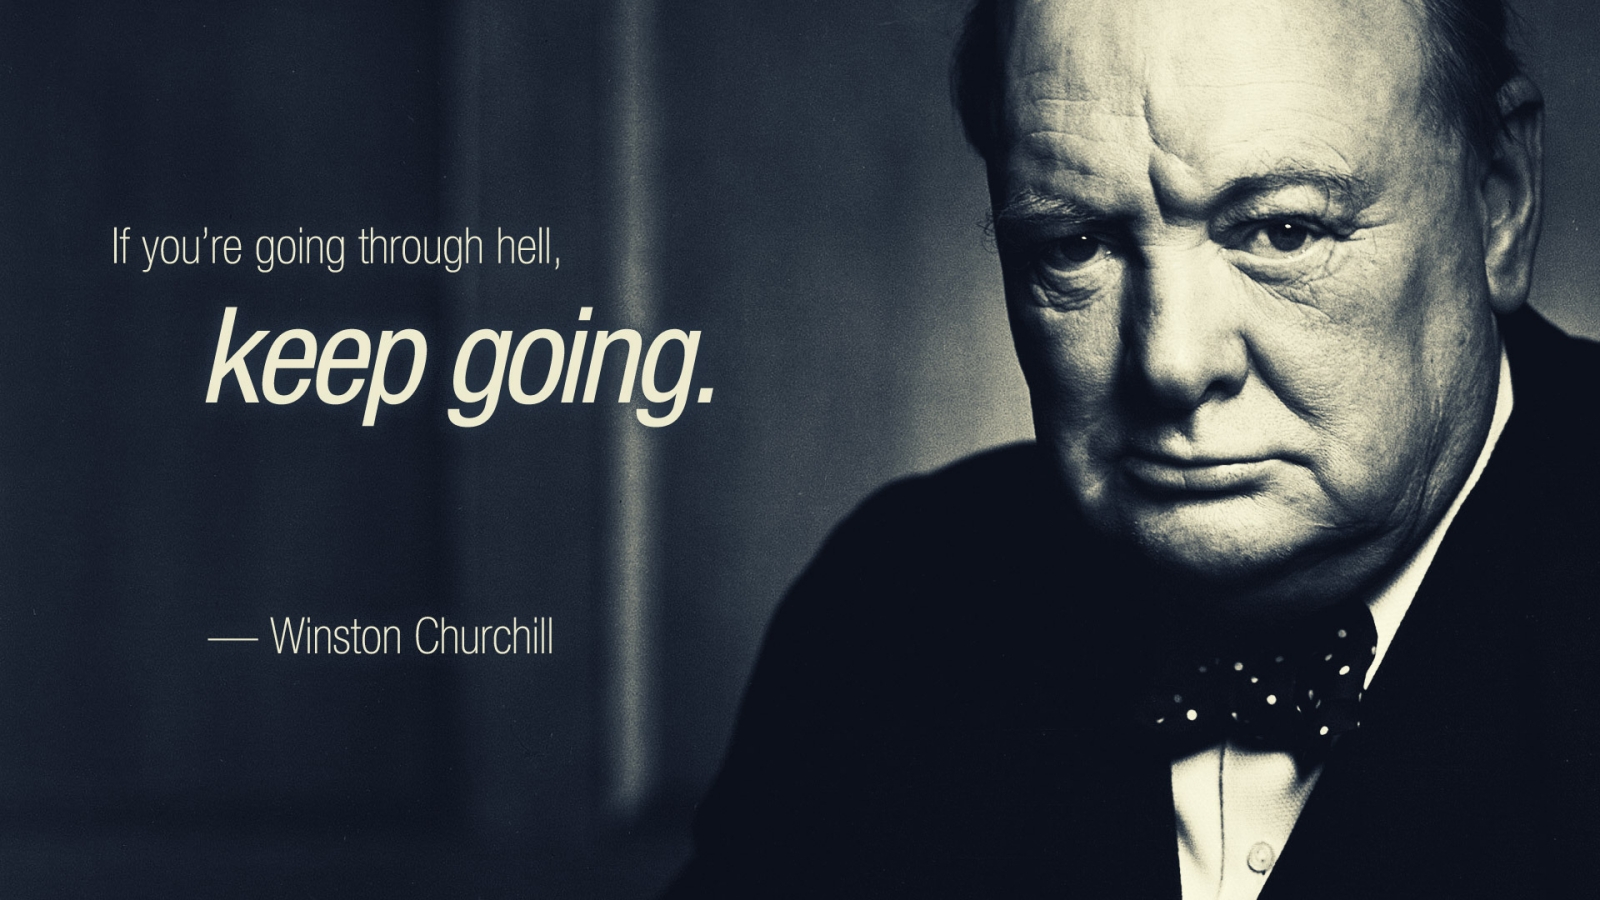 Winston Churchill Quote for 1600 x 900 HDTV resolution